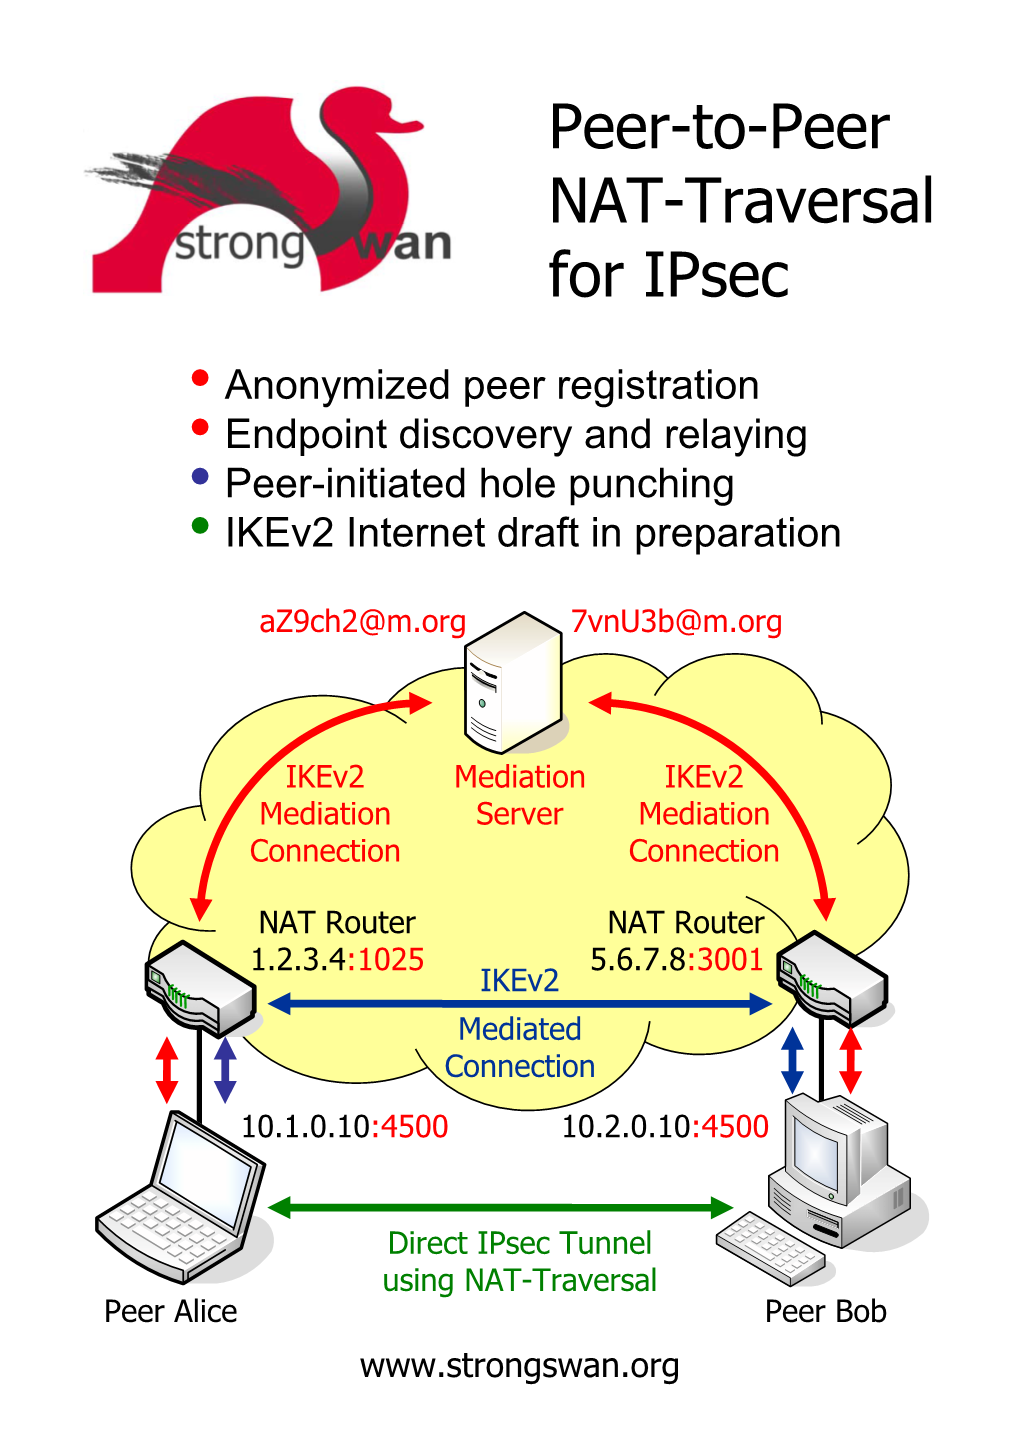 Peer-To-Peer NAT-Traversal for Ipsec